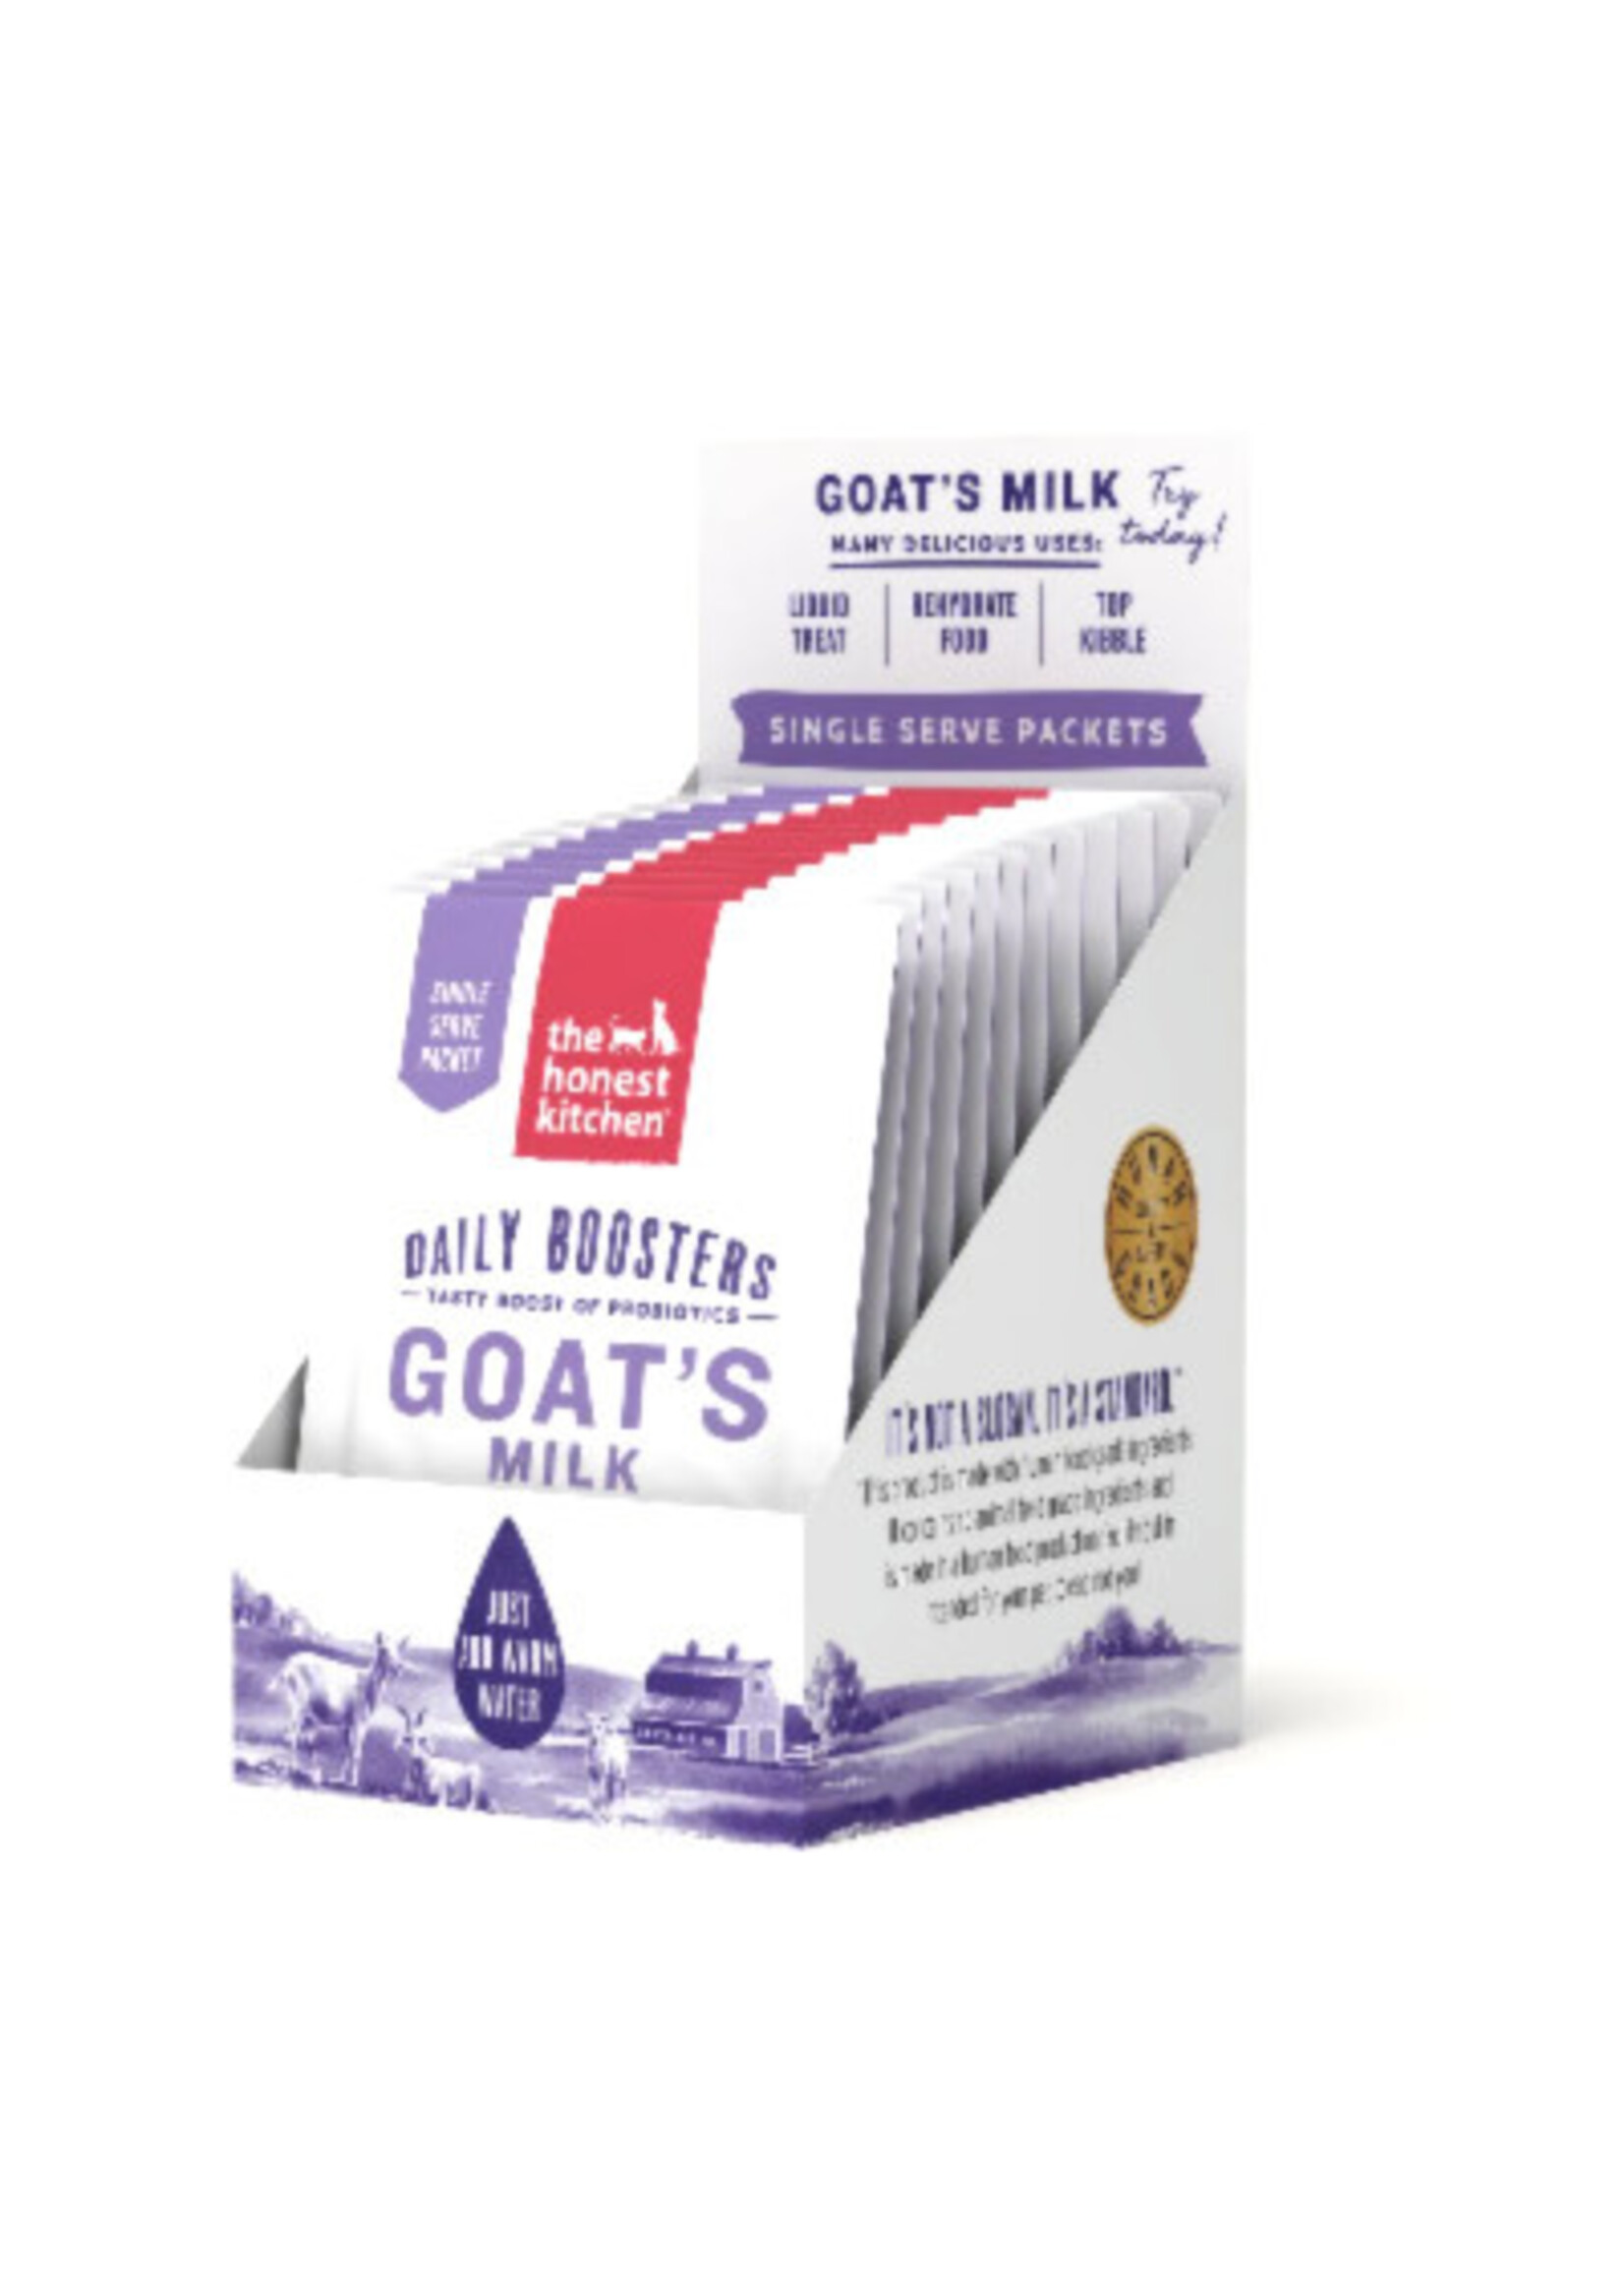 The Honest Kitchen Honest Kitchen Daily Boosters Goat's Milk Single Serve Pack